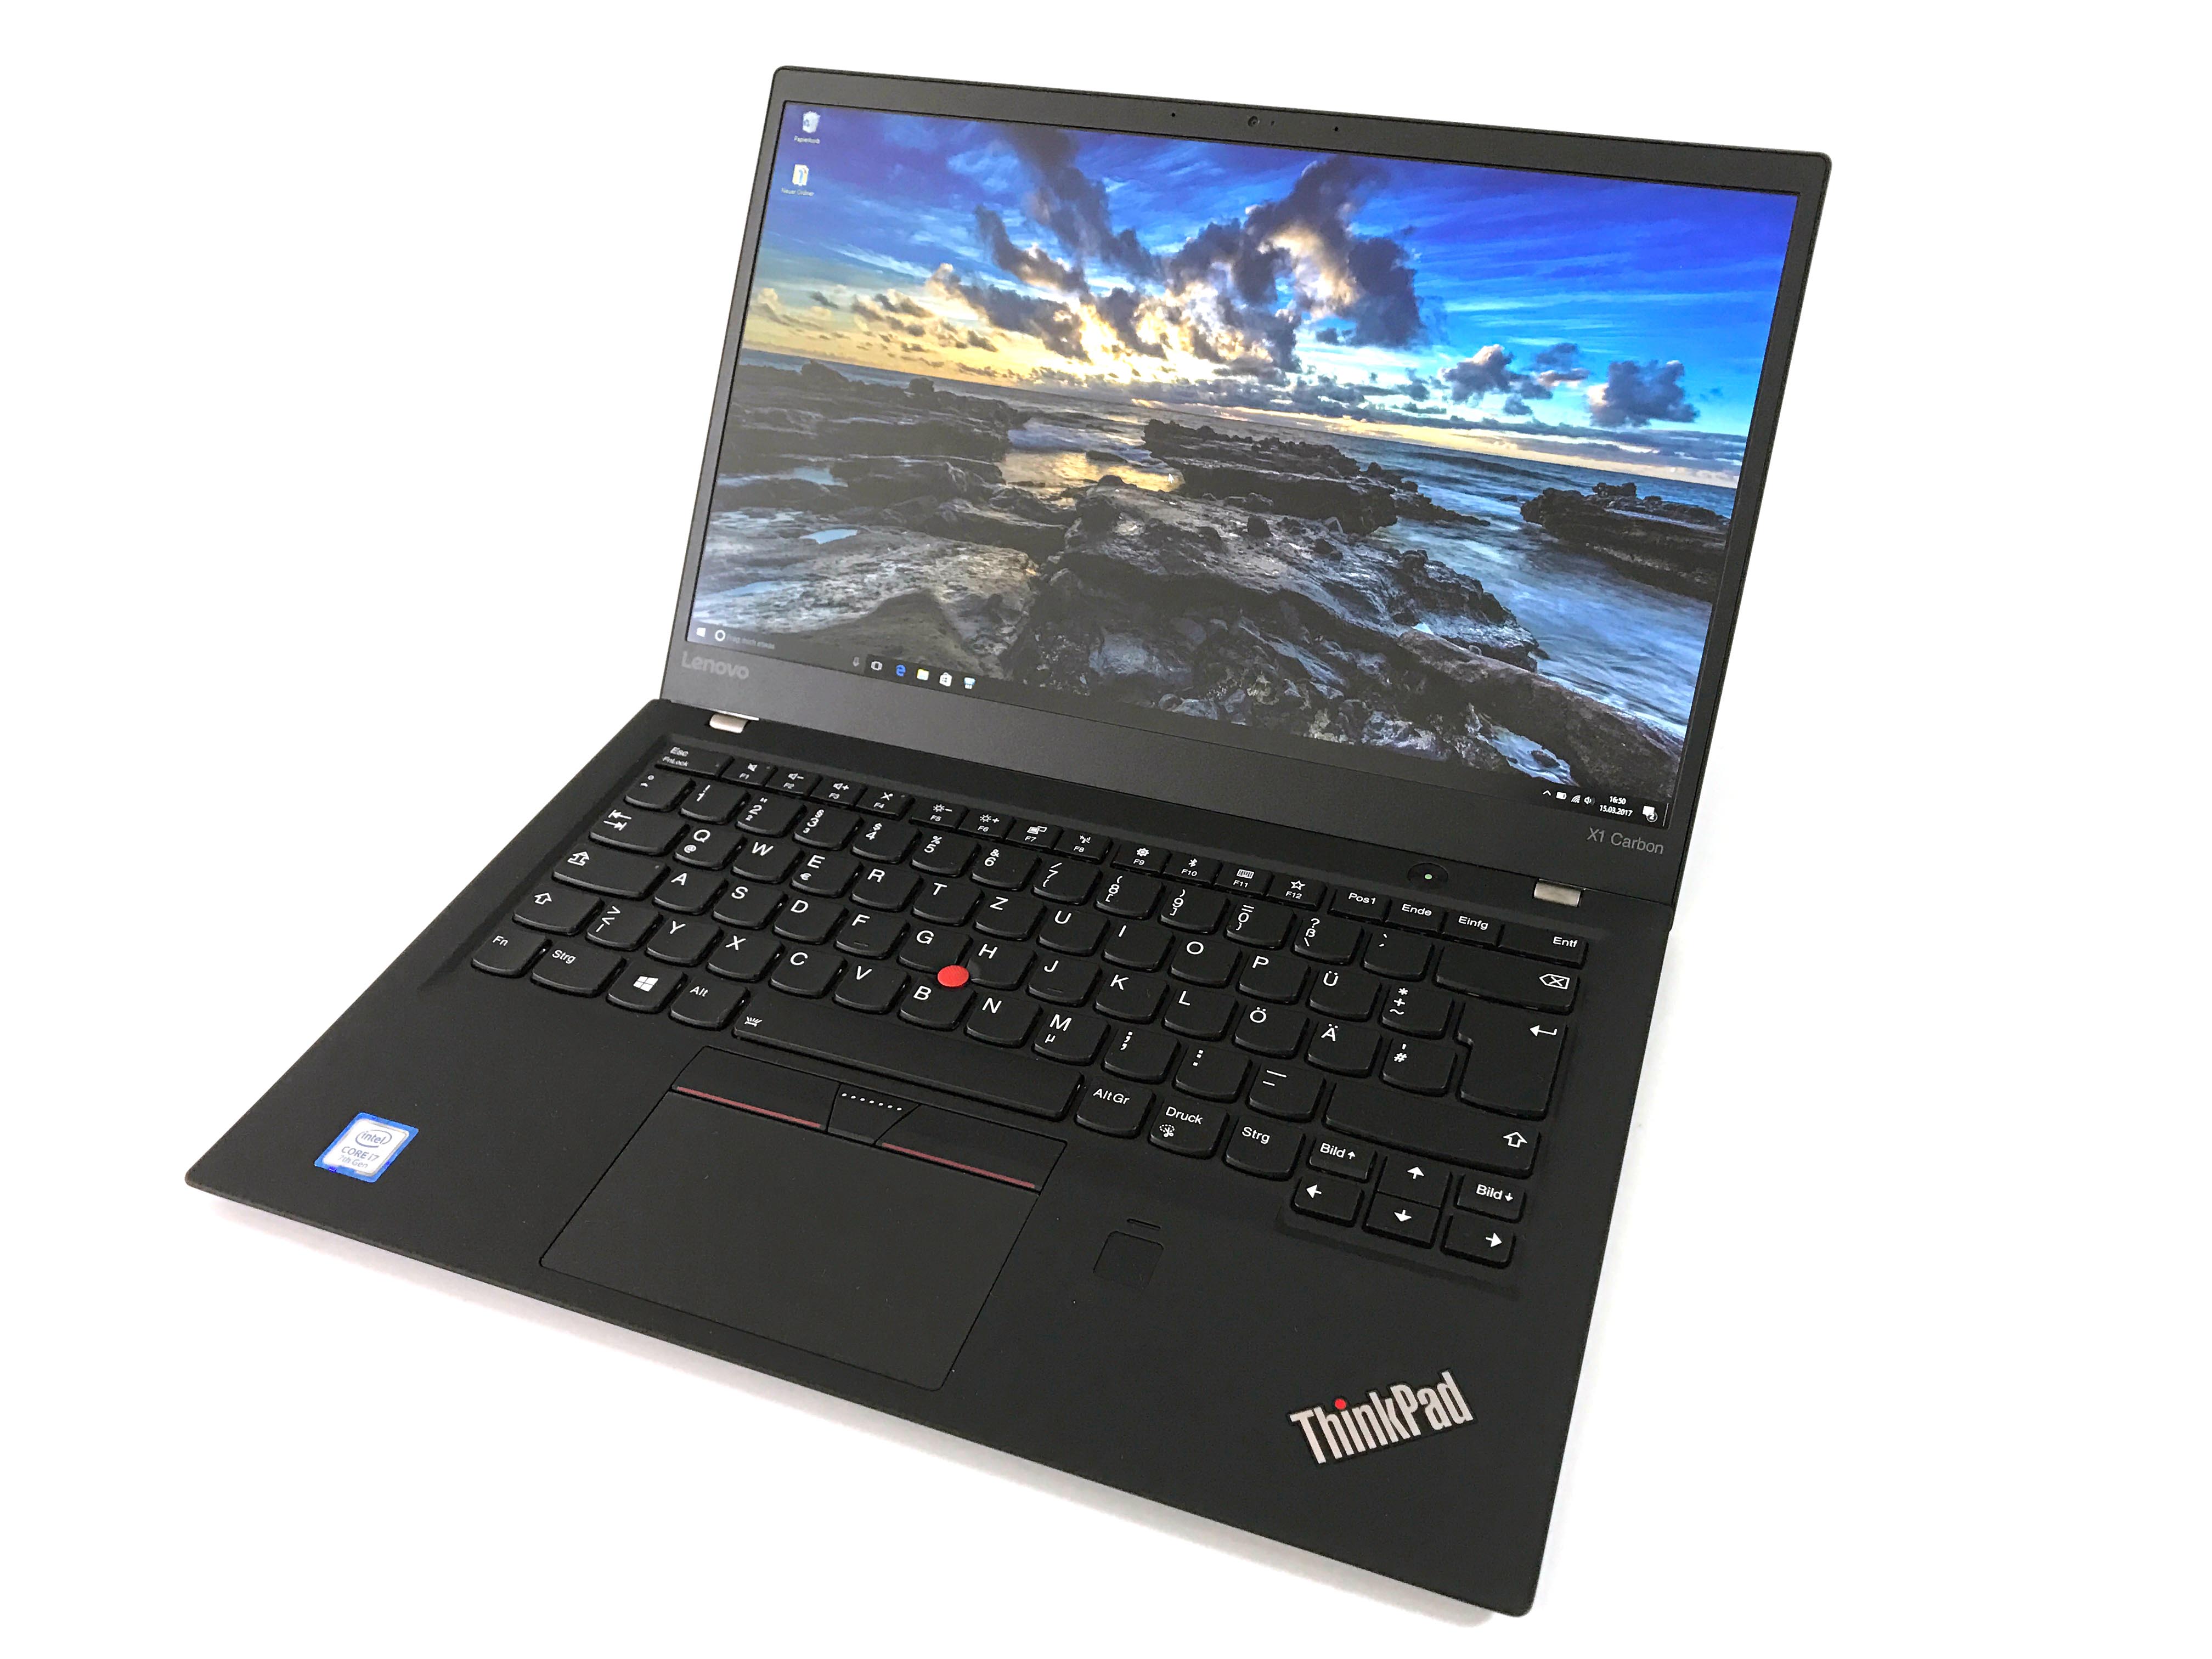 Lenovo ThinkPad X1 Carbon 2017 (Core i7, Full-HD) Laptop Review ...